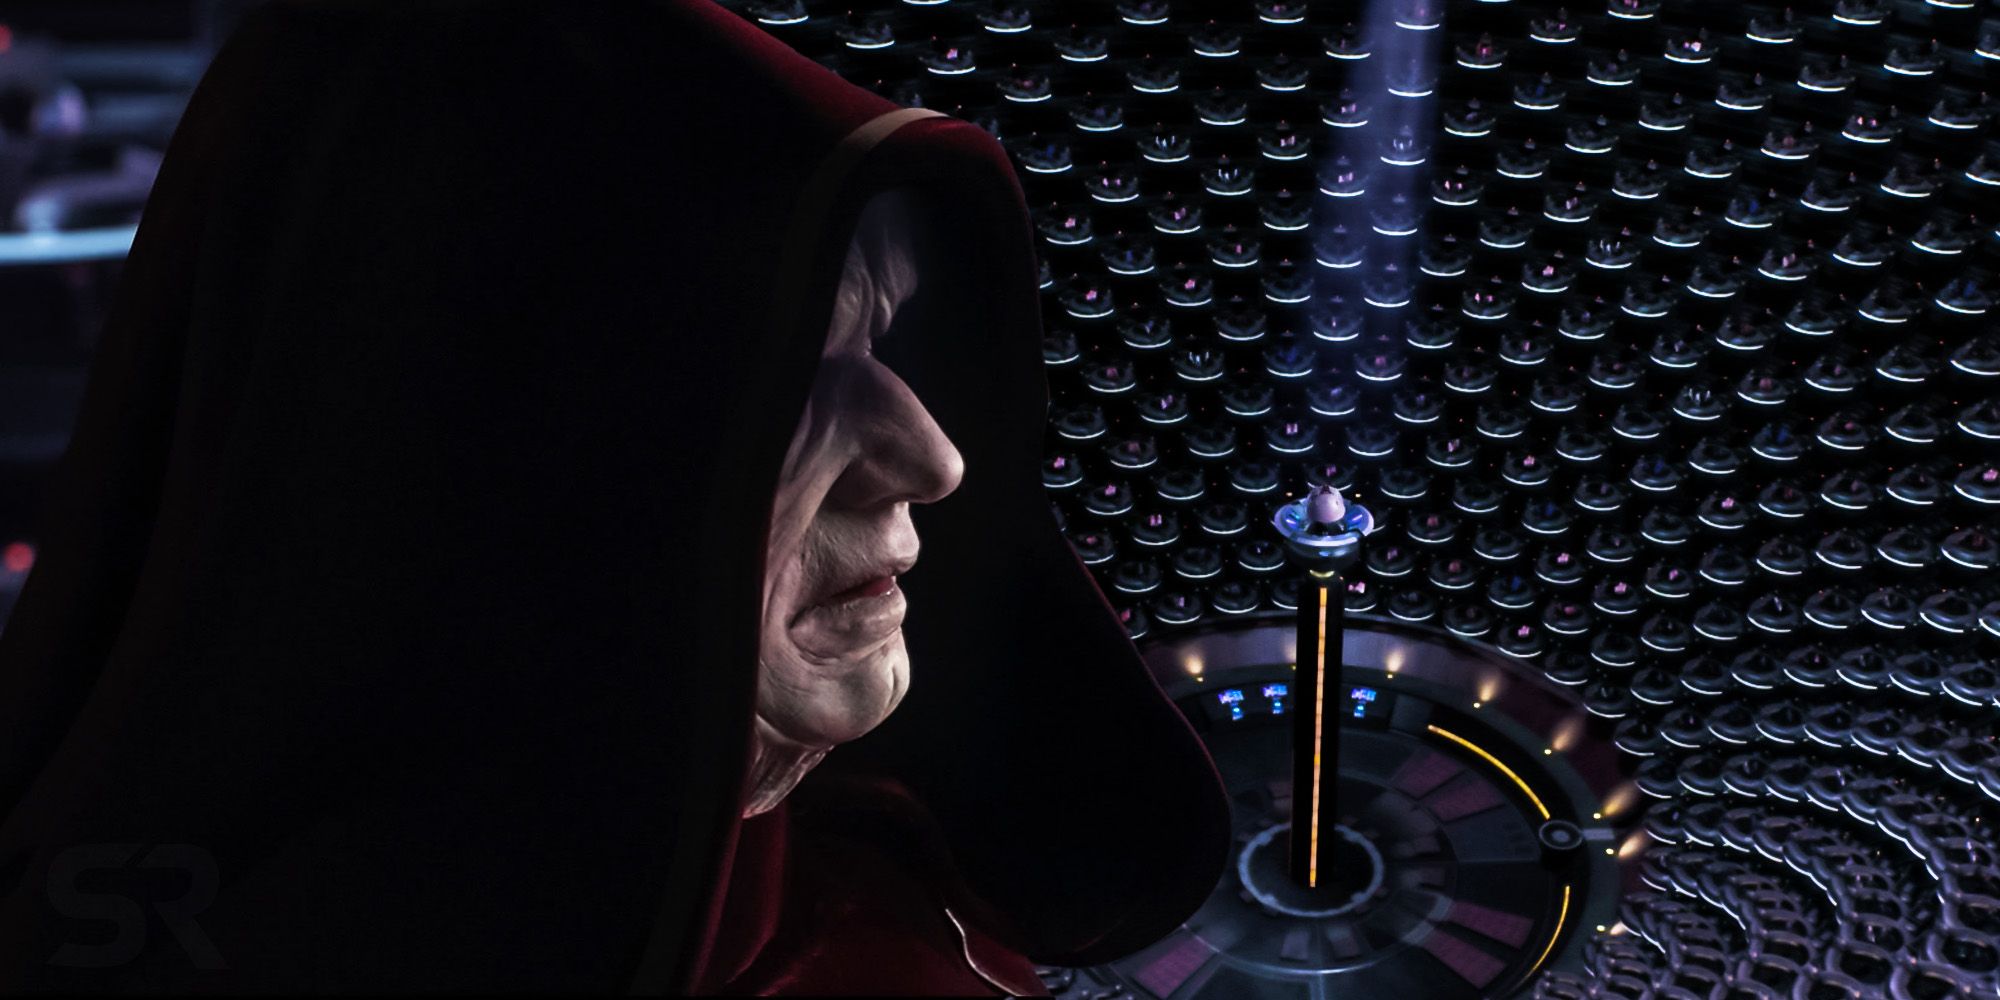 Emperor palpatine galactic senate star wars